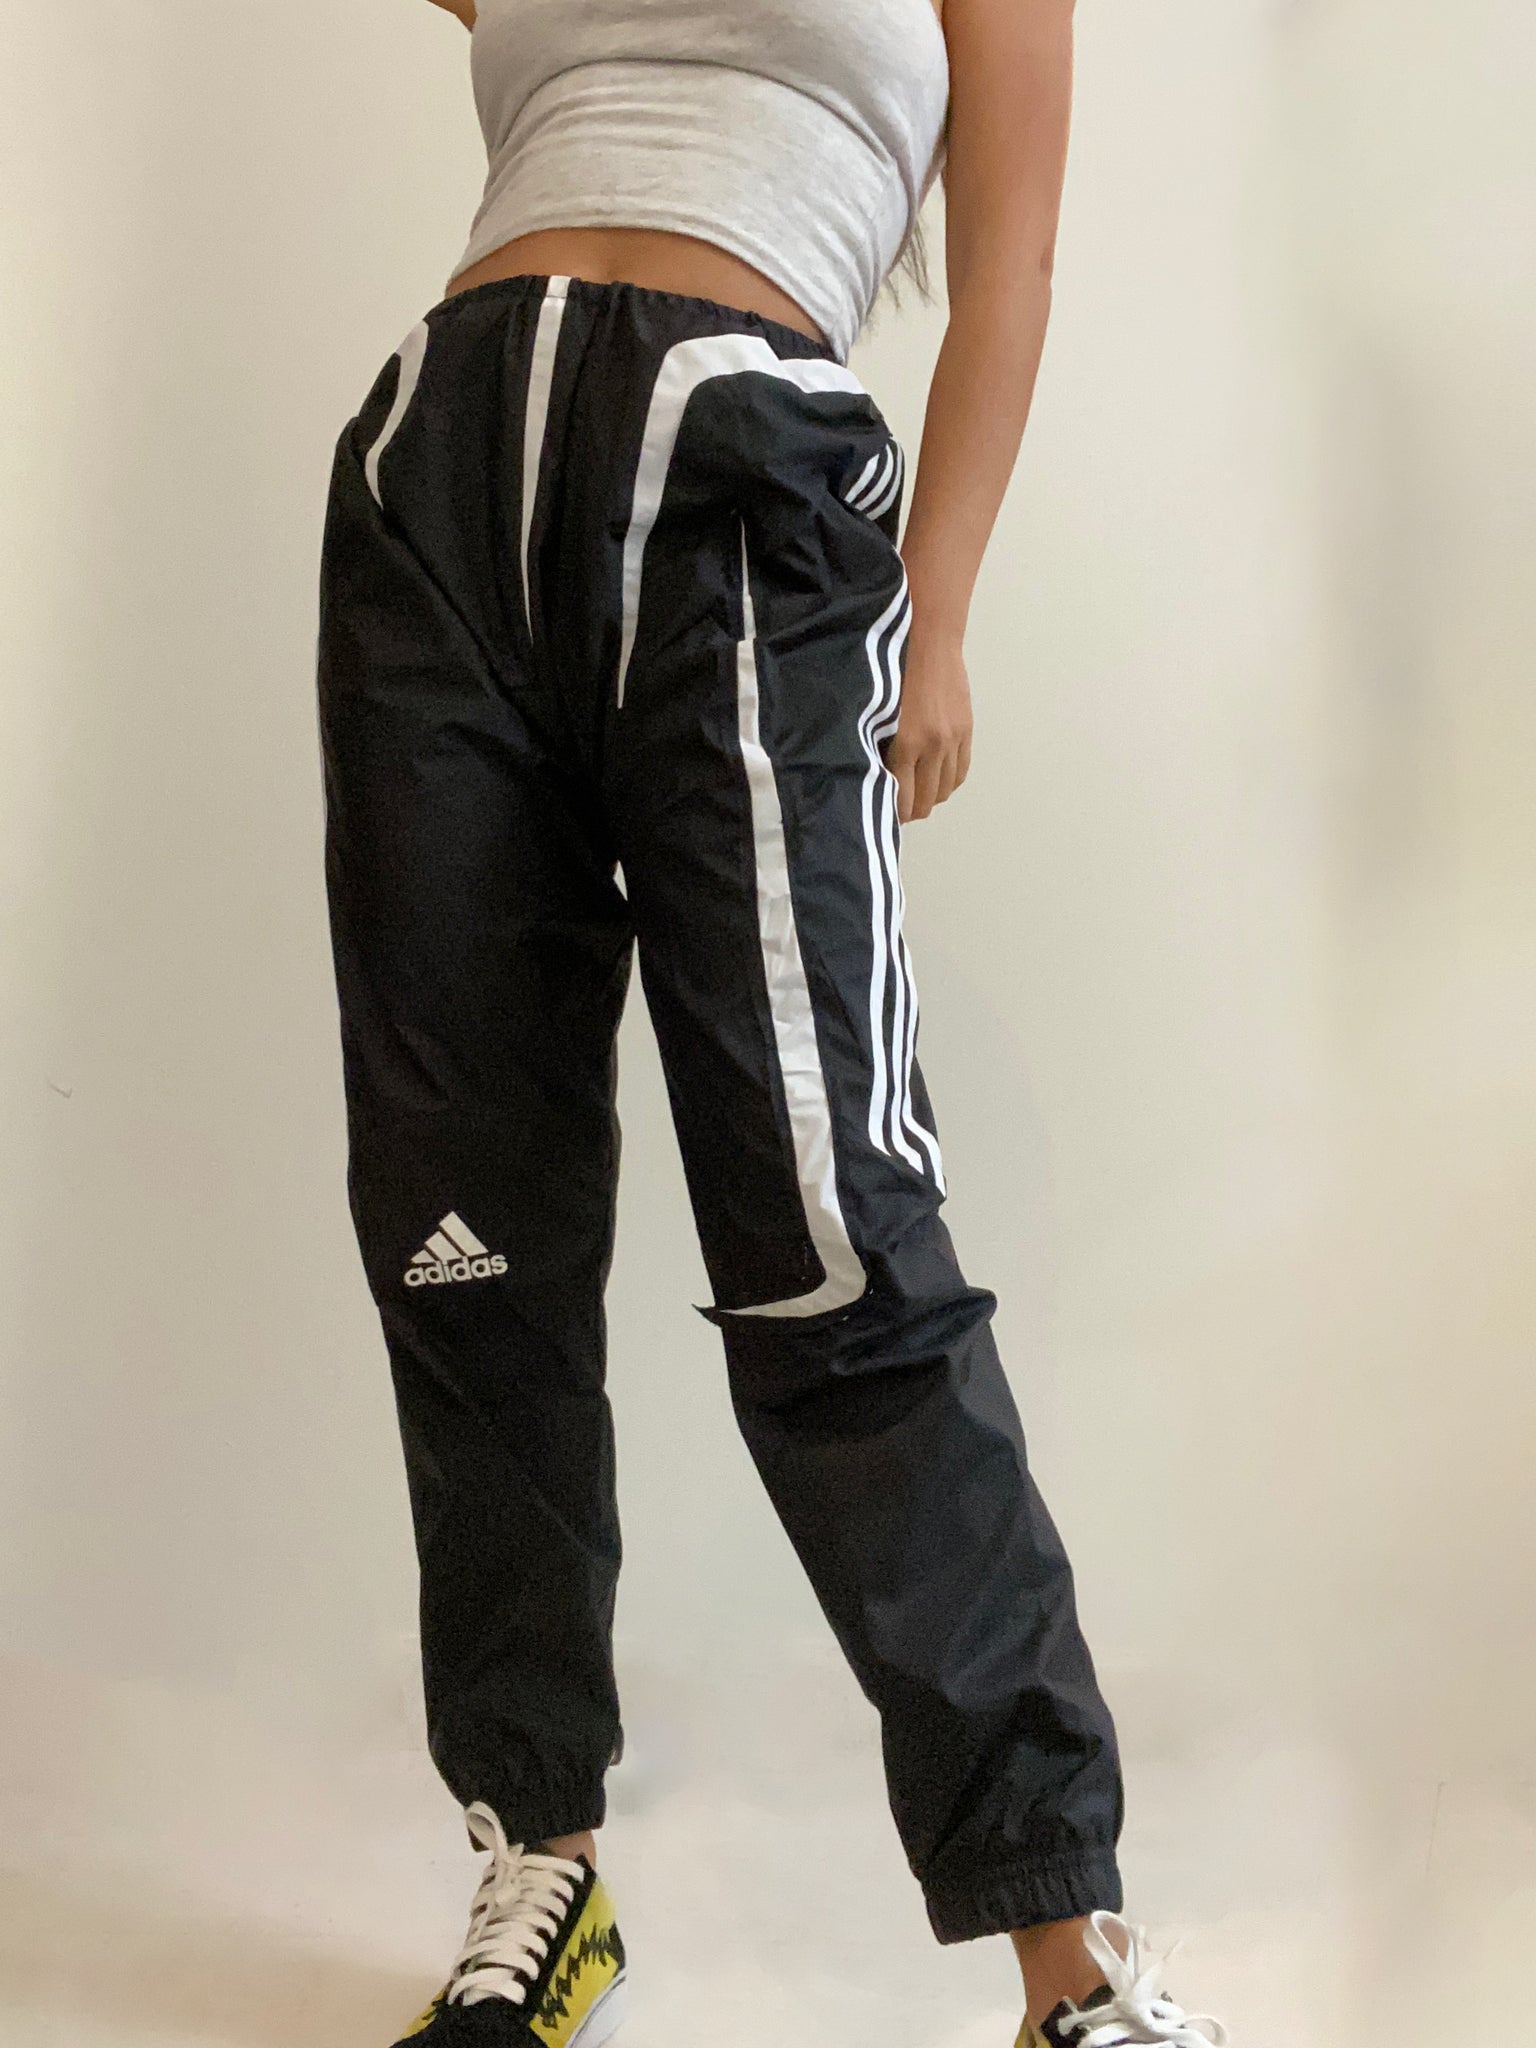 Women's Adidas Loose Fit Windbreaker Track Pants... - Depop